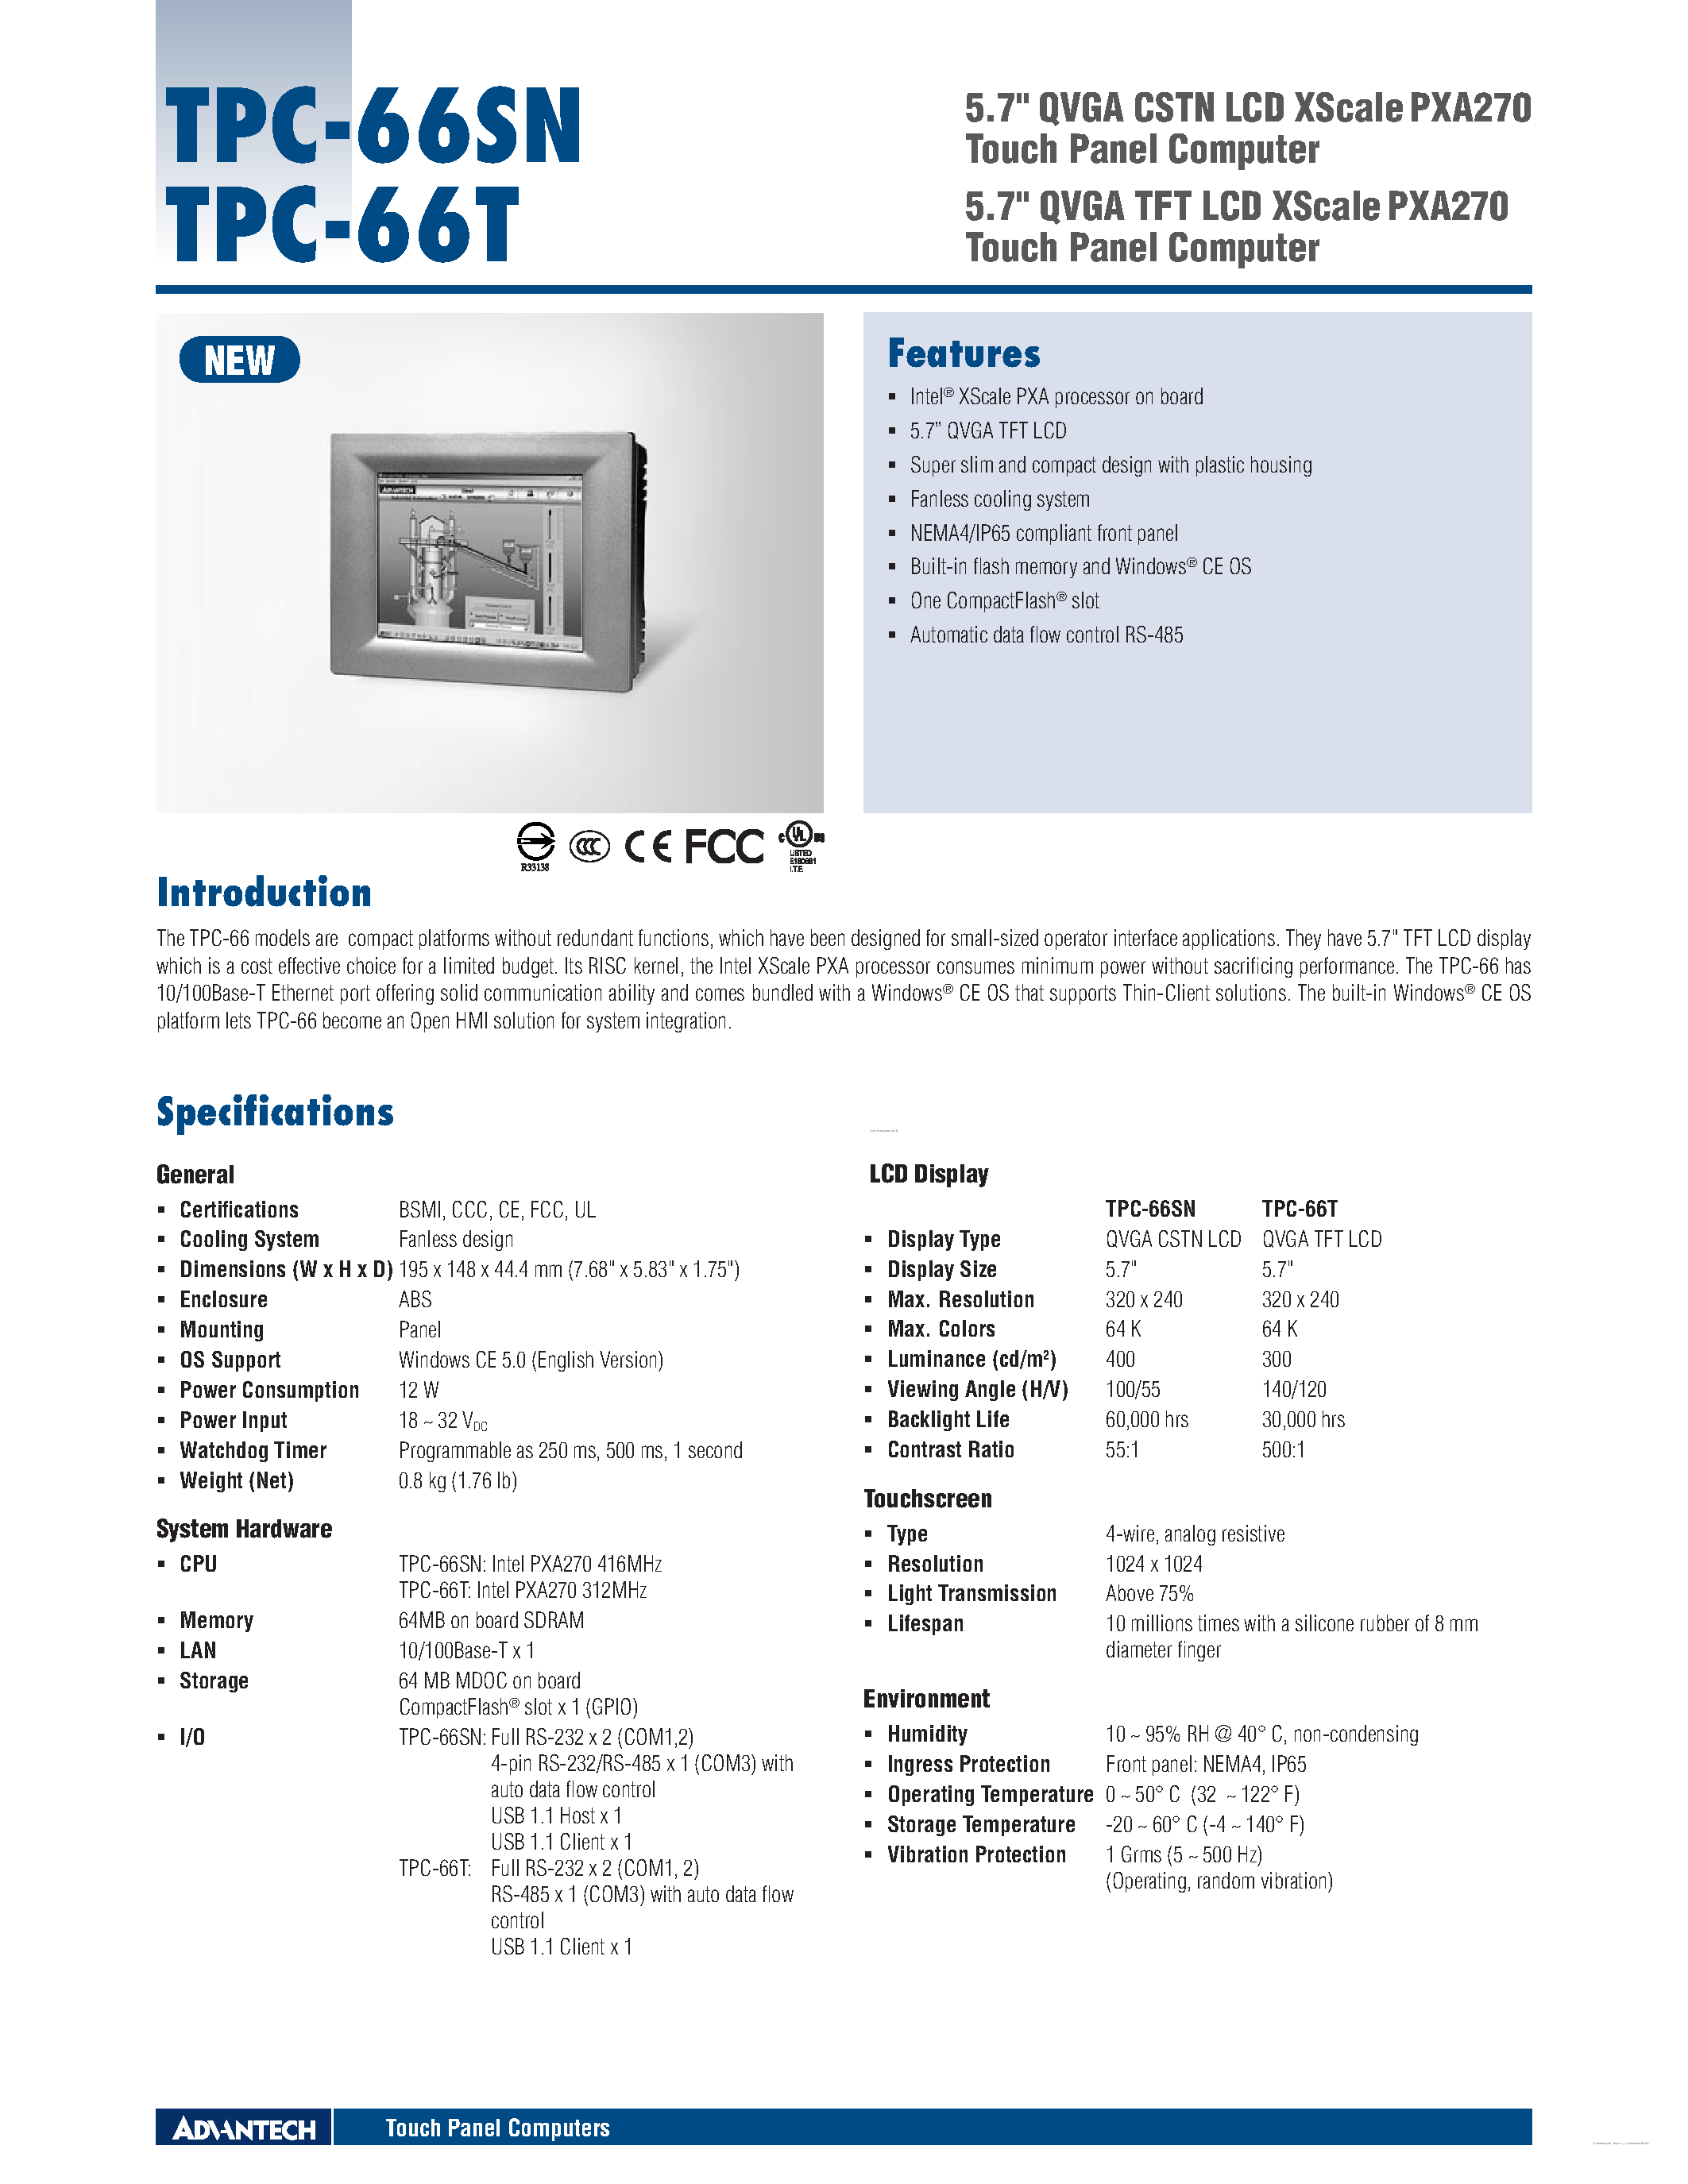 Даташит TPC-66SN - 5.7 QVGA CSTN LCD XScale PXA270 Touch Panel Computer страница 1